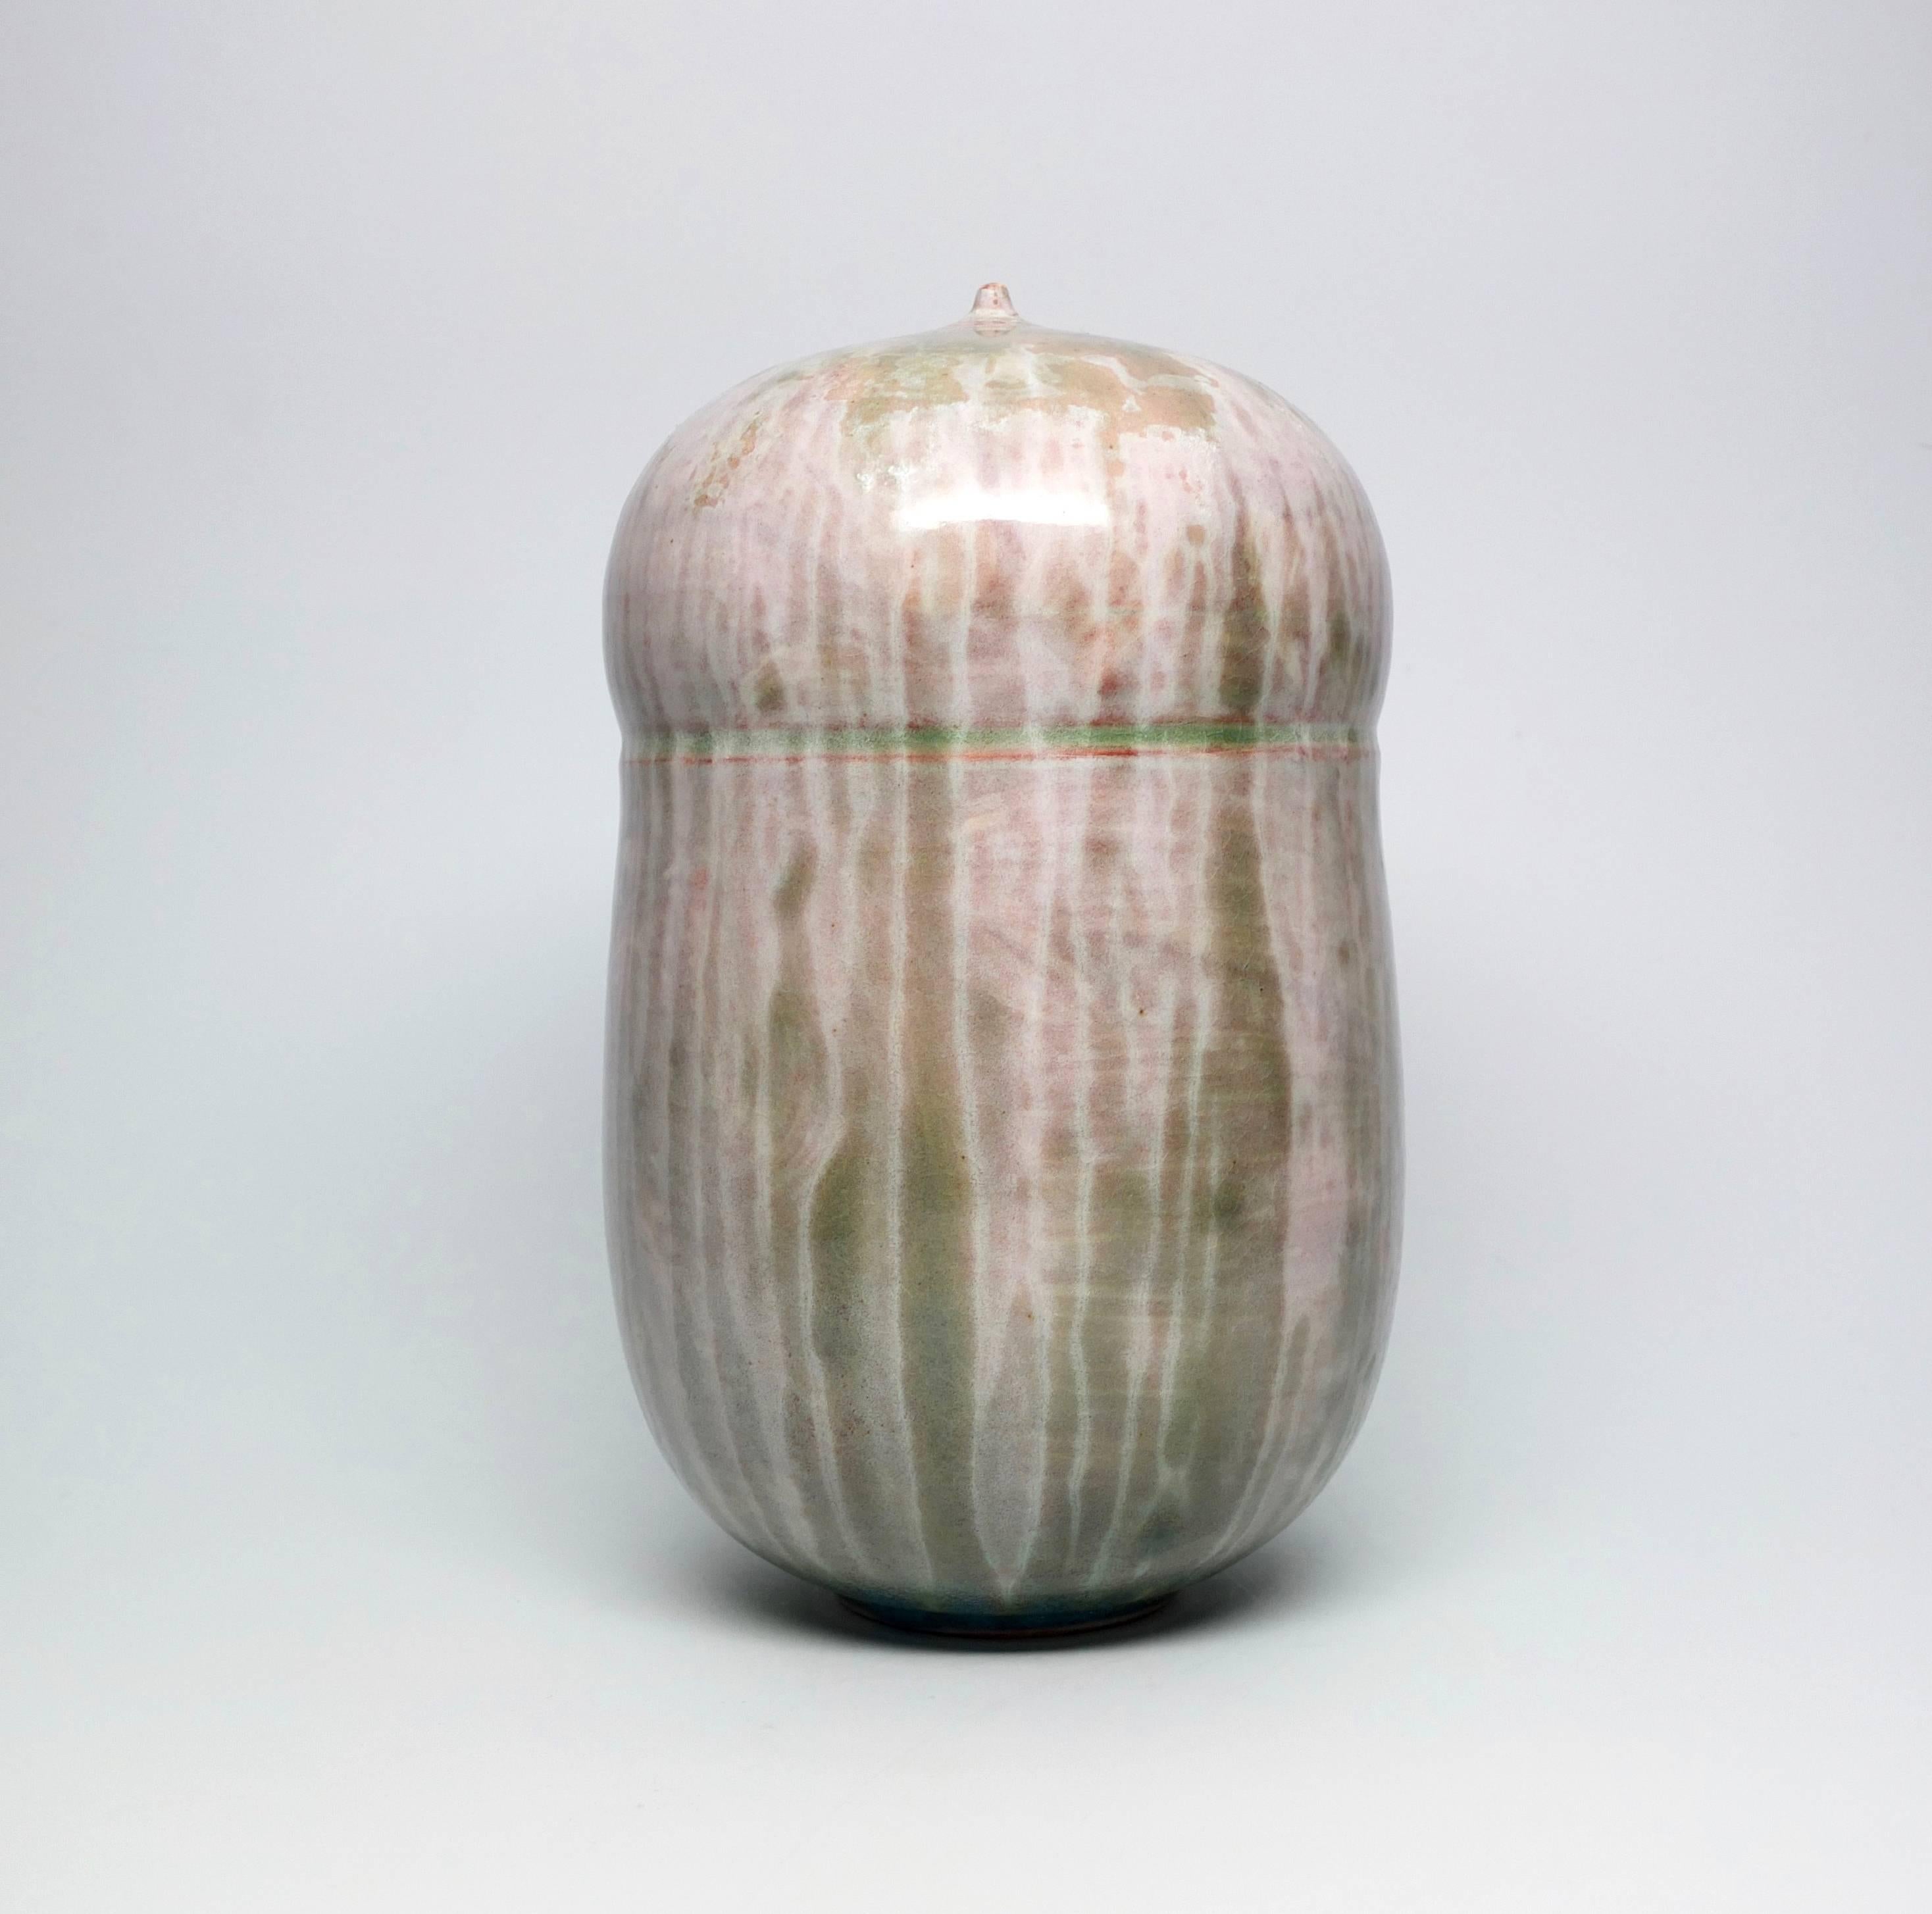 Modern Alluring Ceramic Vessel with Stunning Glaze Pattern by Jeffrey Loura, 2016